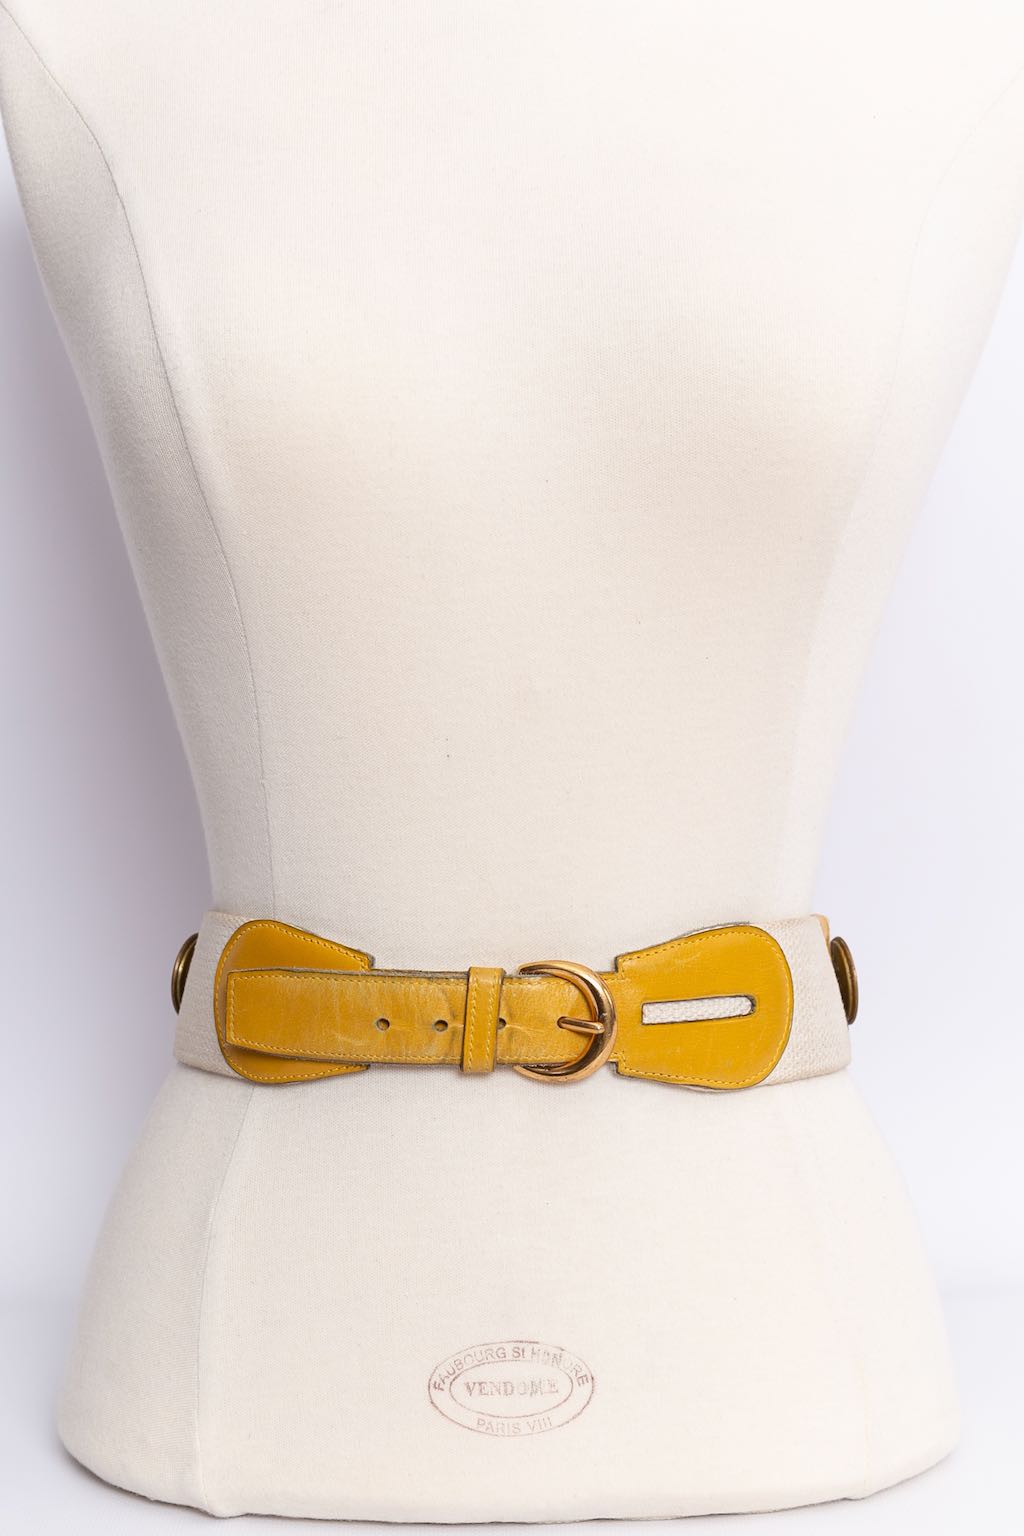 Hermès leather and canvas belt